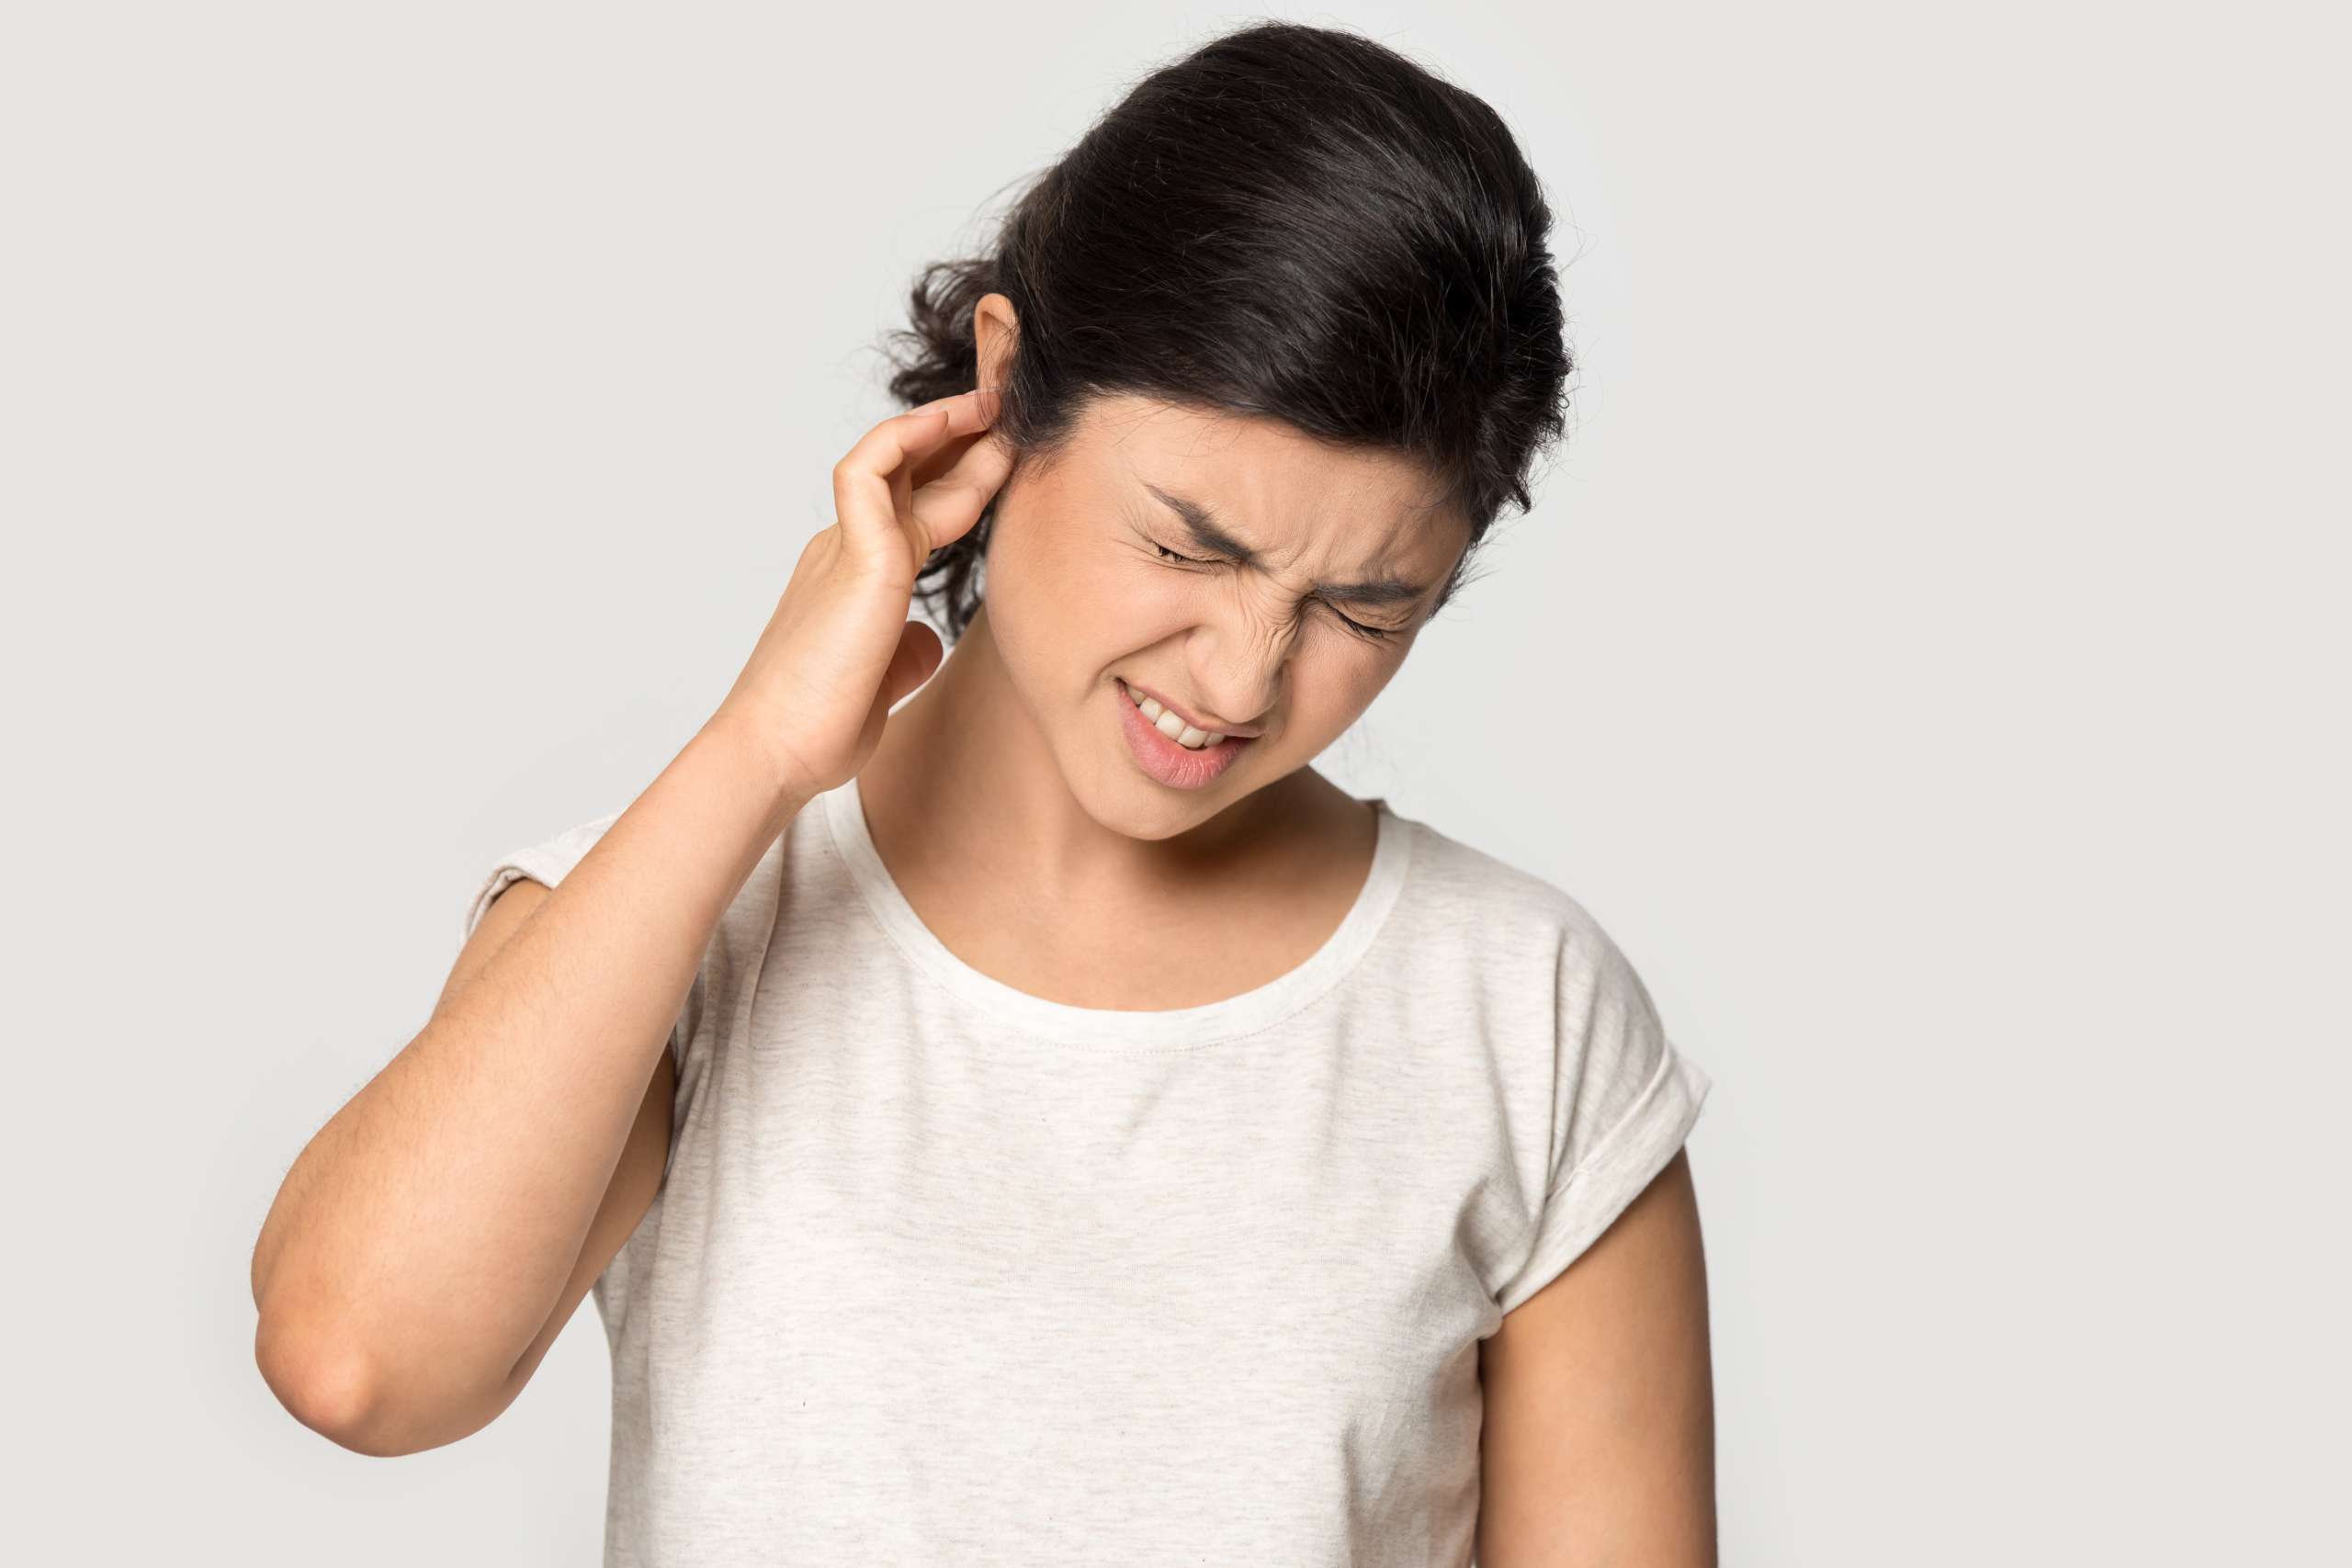  millennial lady suffering from strong earache.